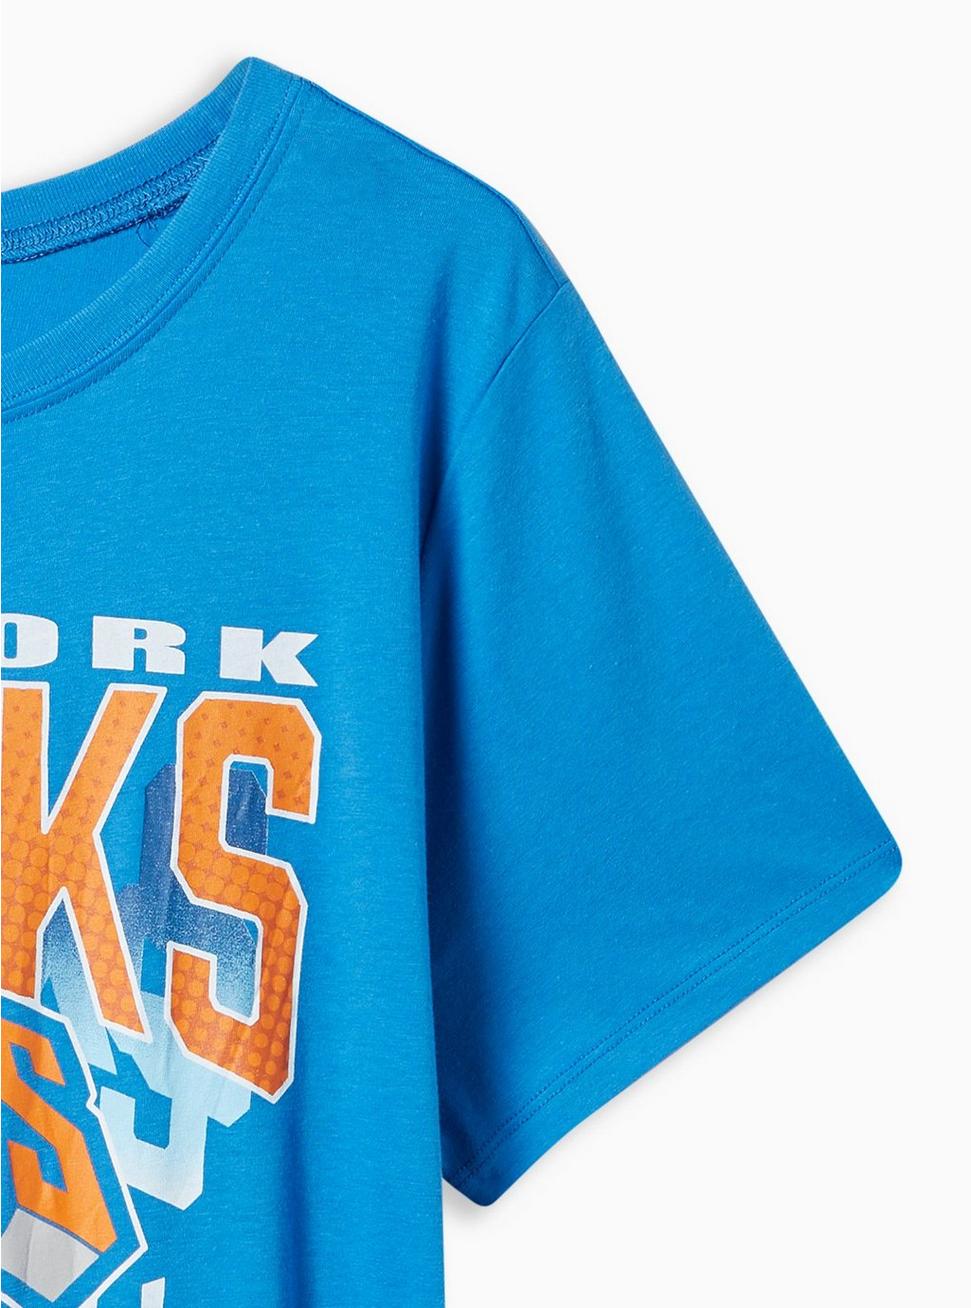 NBA New York Knicks Classic Fit Cotton Crew Neck Tee, BLUE, alternate